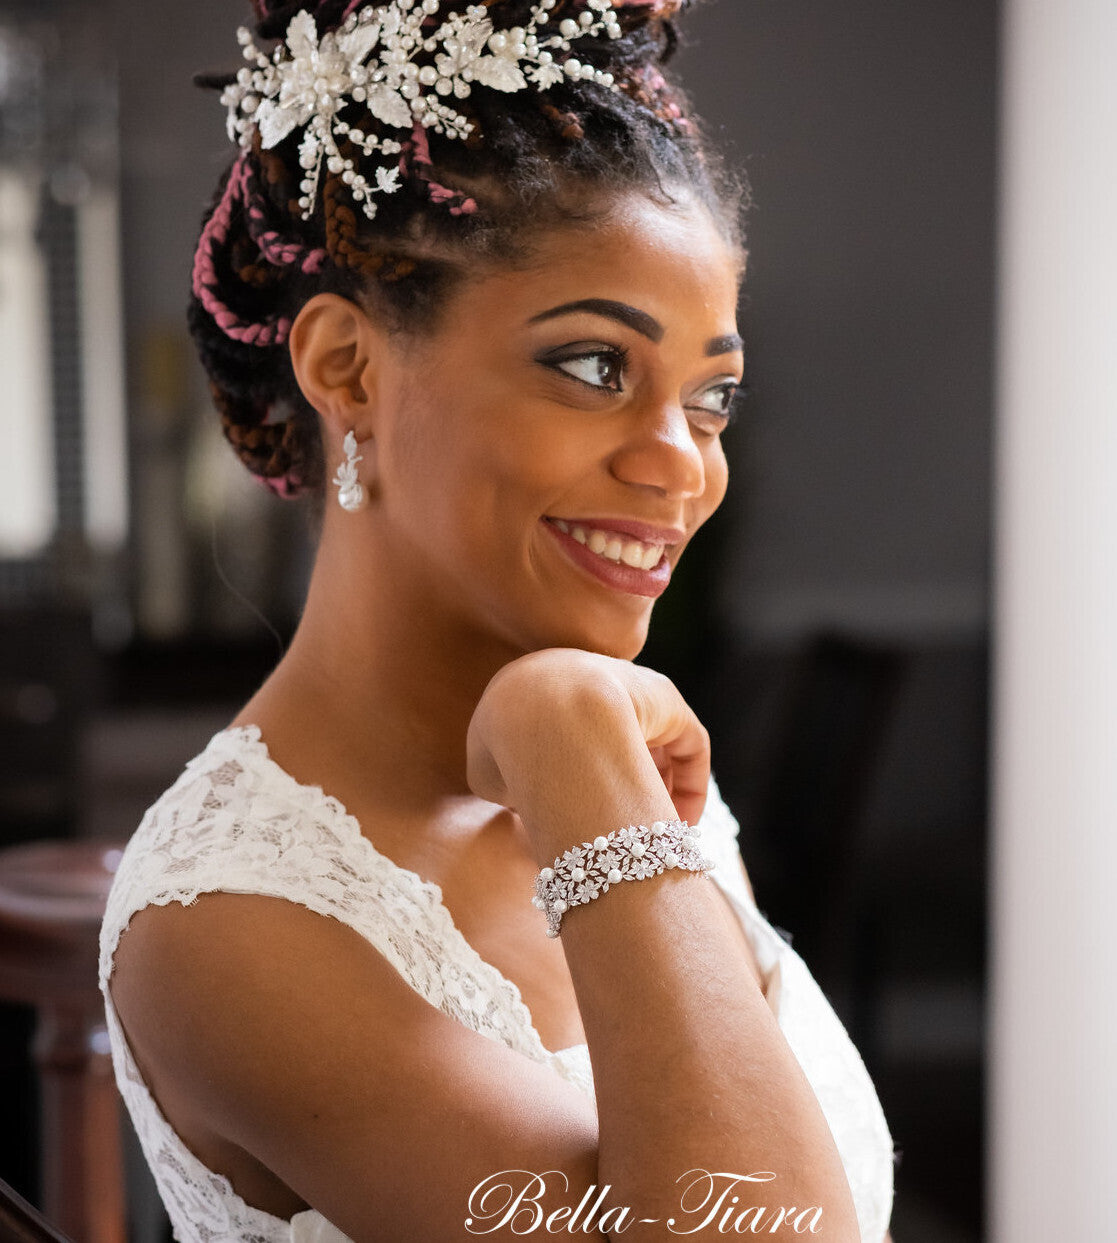 Italia - Elegant CZ bridal wedding pearl bracelet